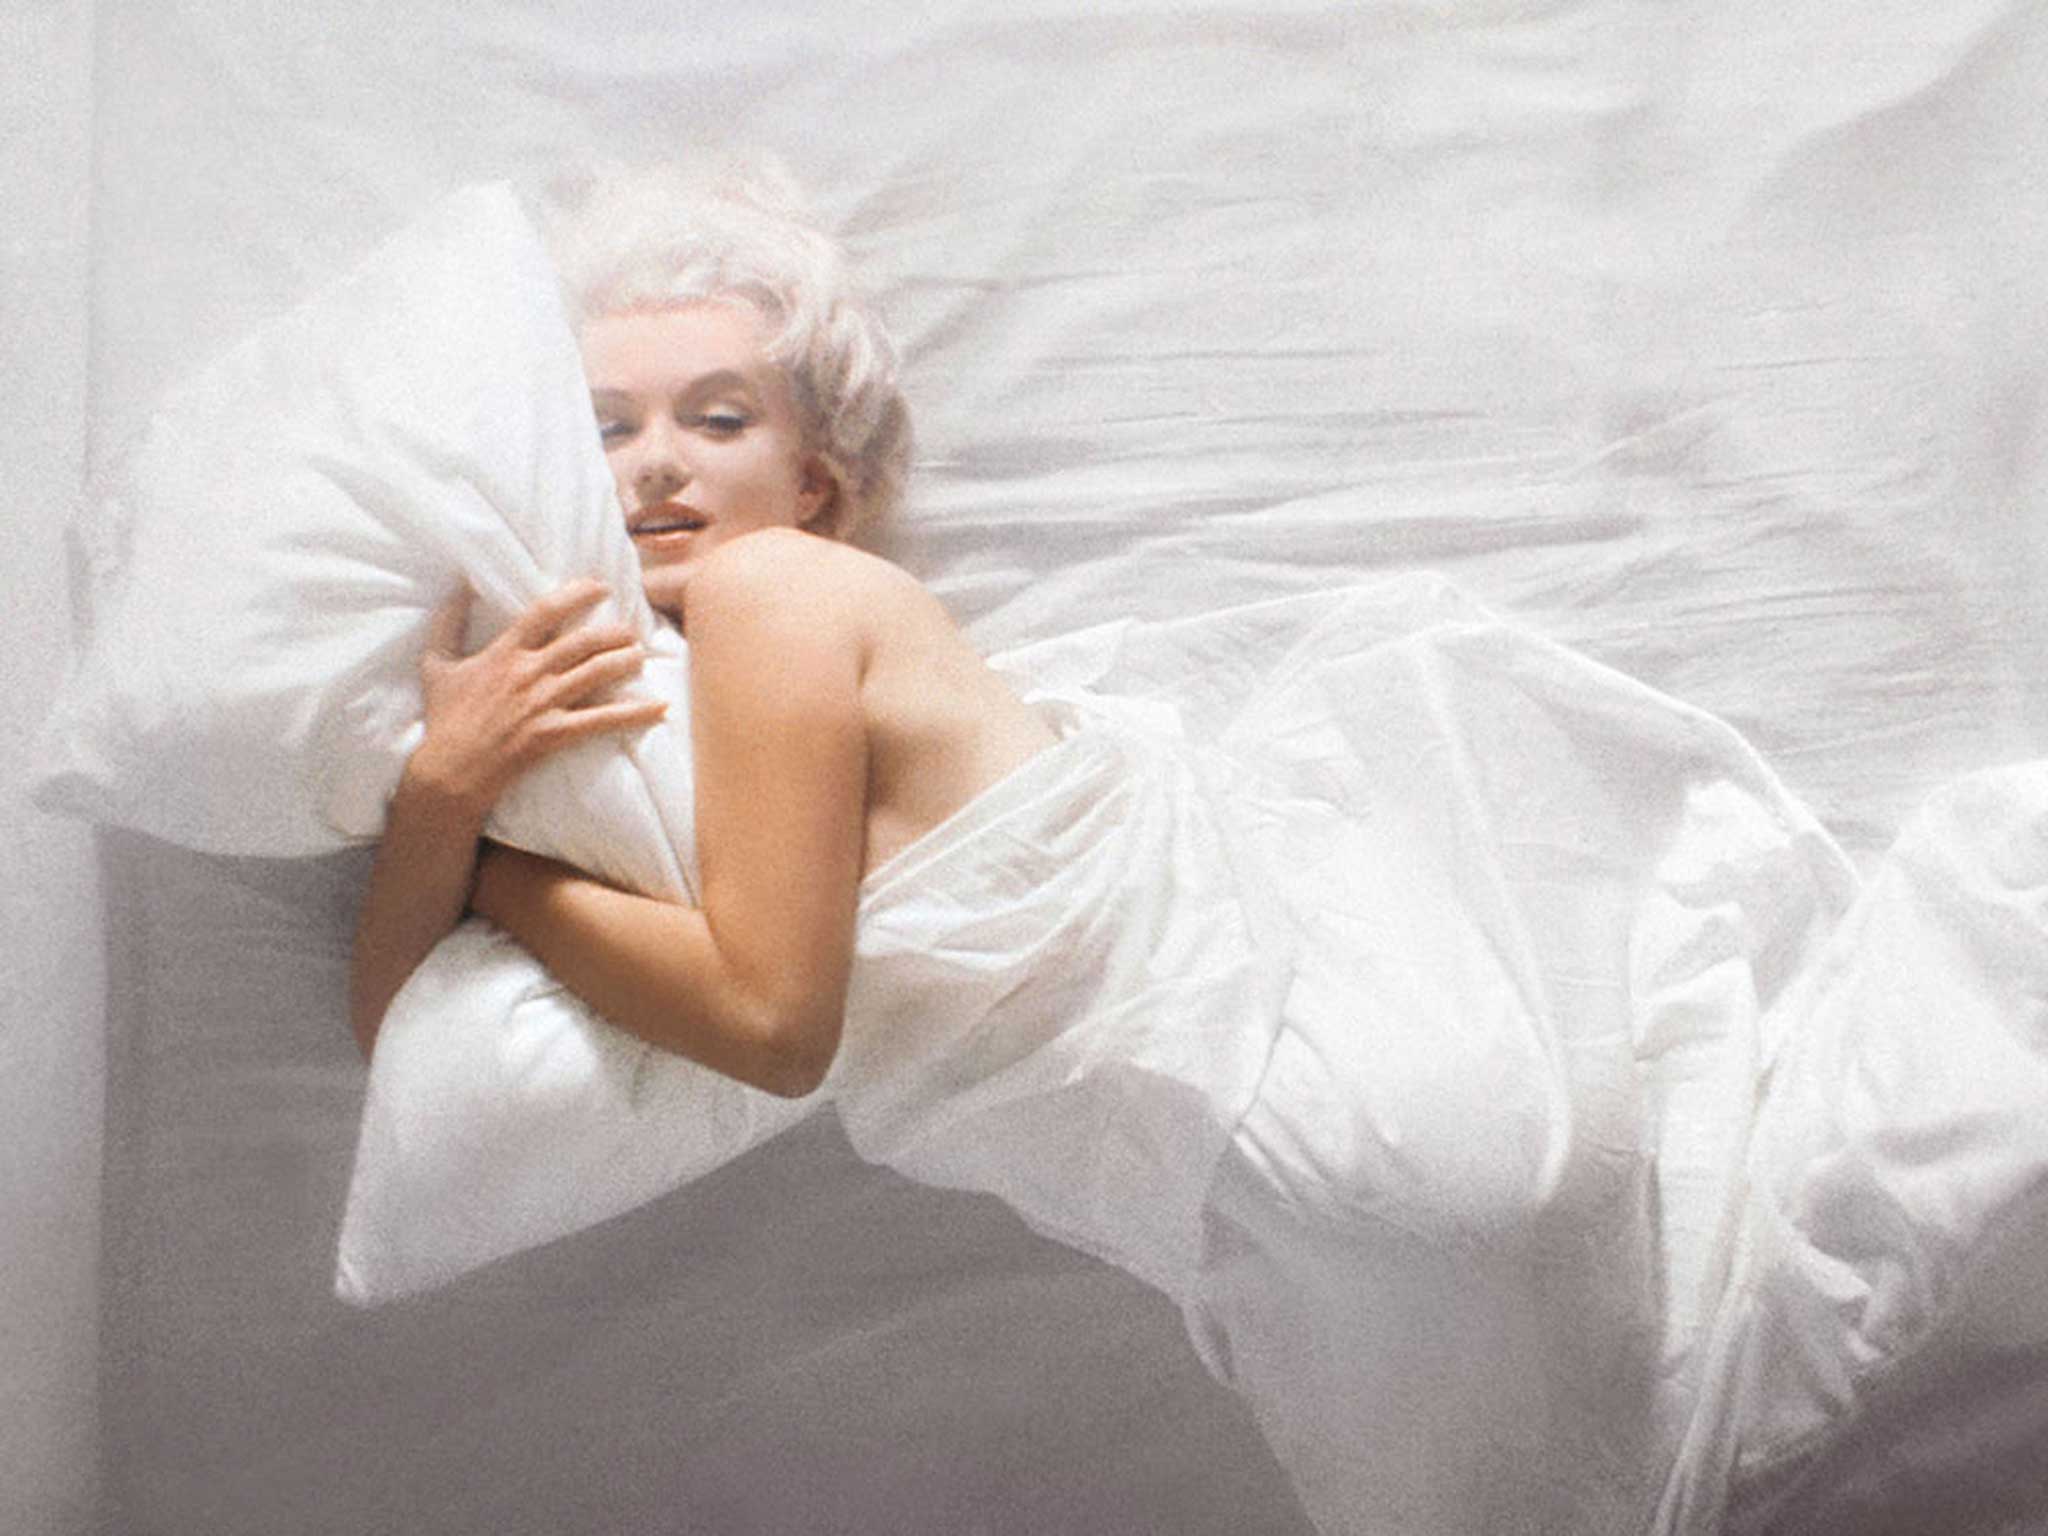 Douglas Kirkland's 1961 photograph shows a whimsical Monroe posing in bed